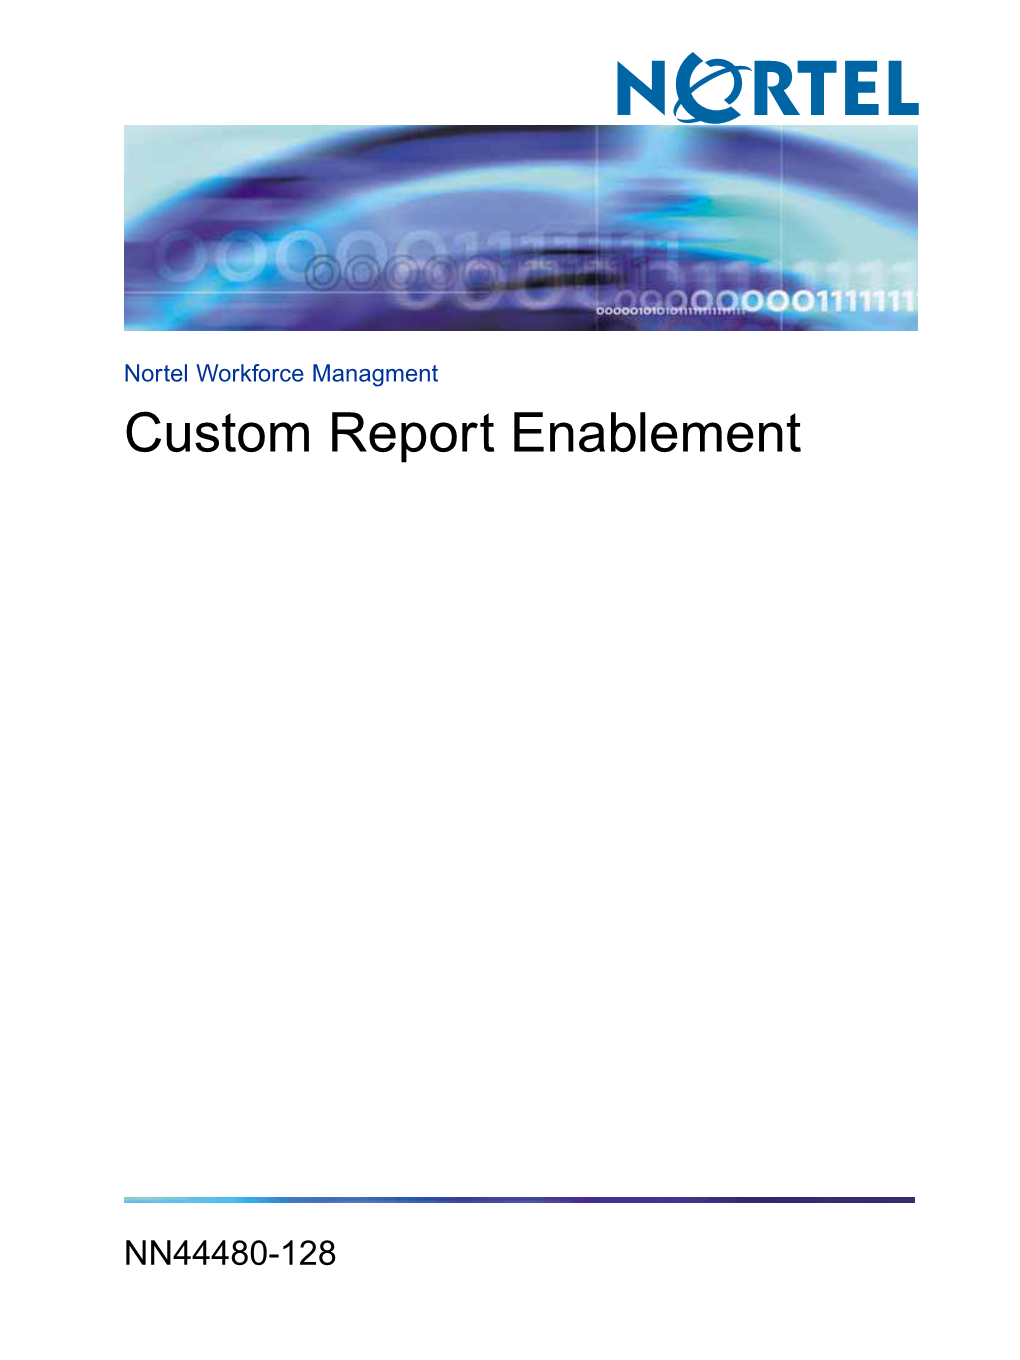 Custom Report Enablement